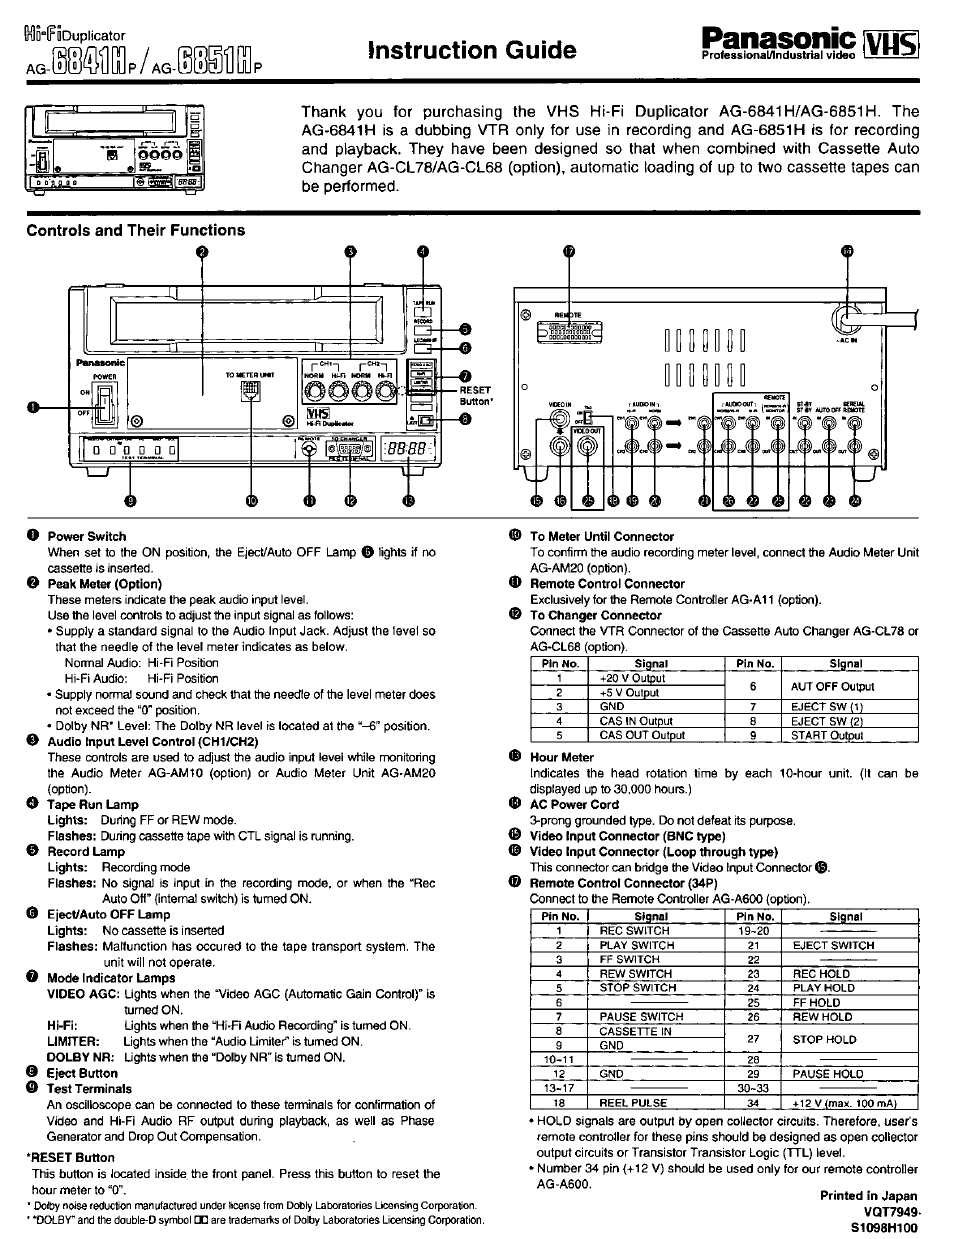 Panasonic VHS Hi-Fi Duplicator AG-6841Hp Manuel d'utilisation | Pages: 8